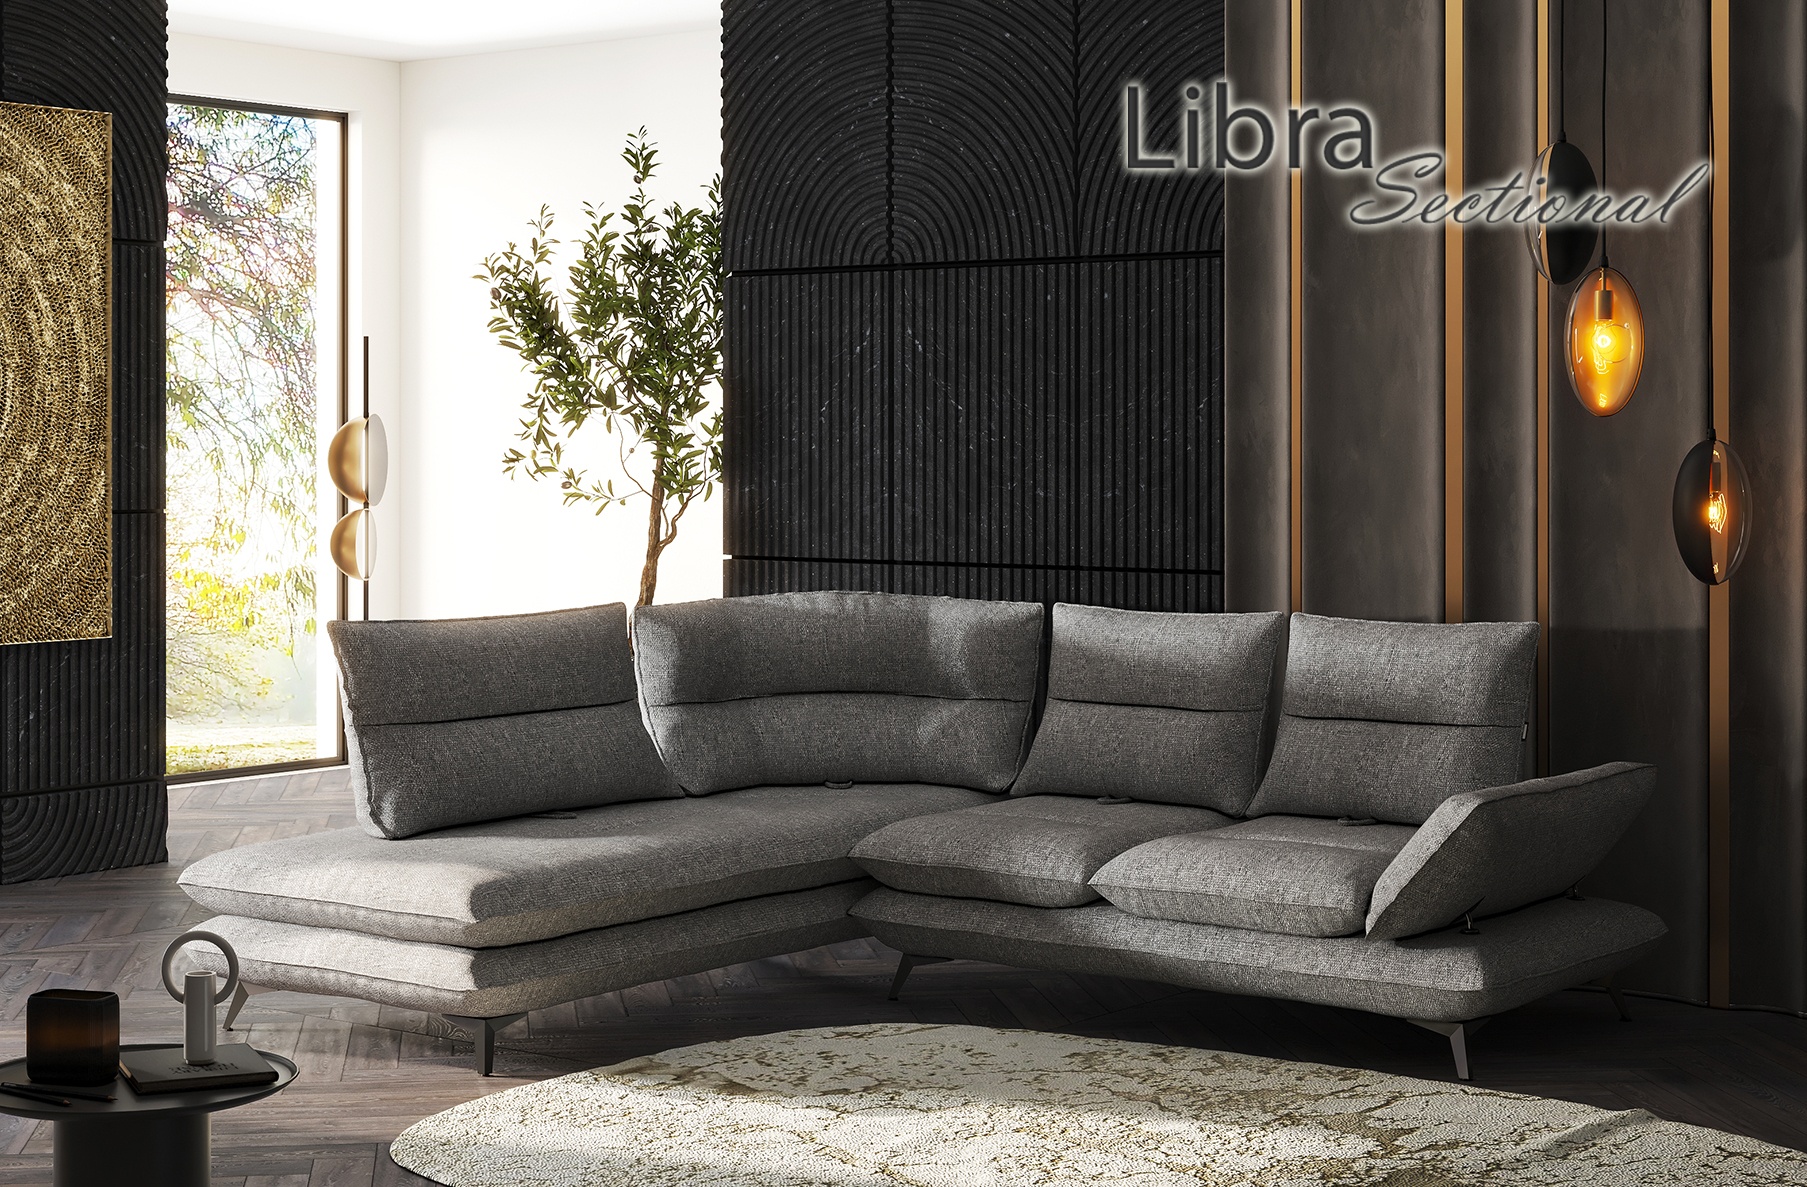 Libra Sectional Sofa, Cheap